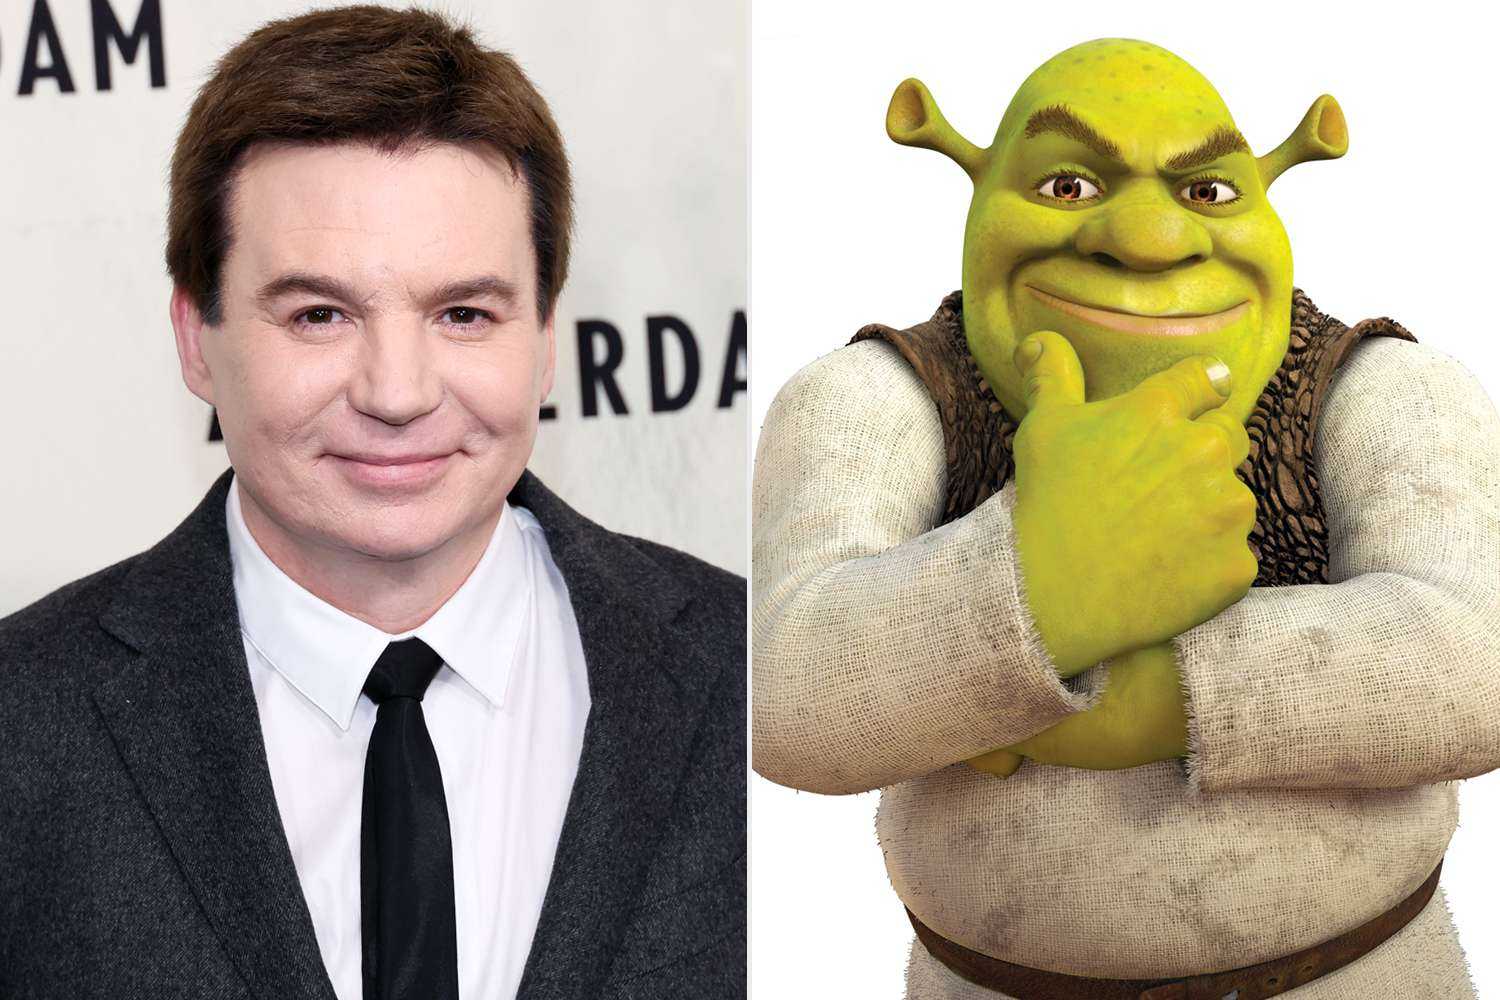 Mike Meyers and Shrek (Source: People)